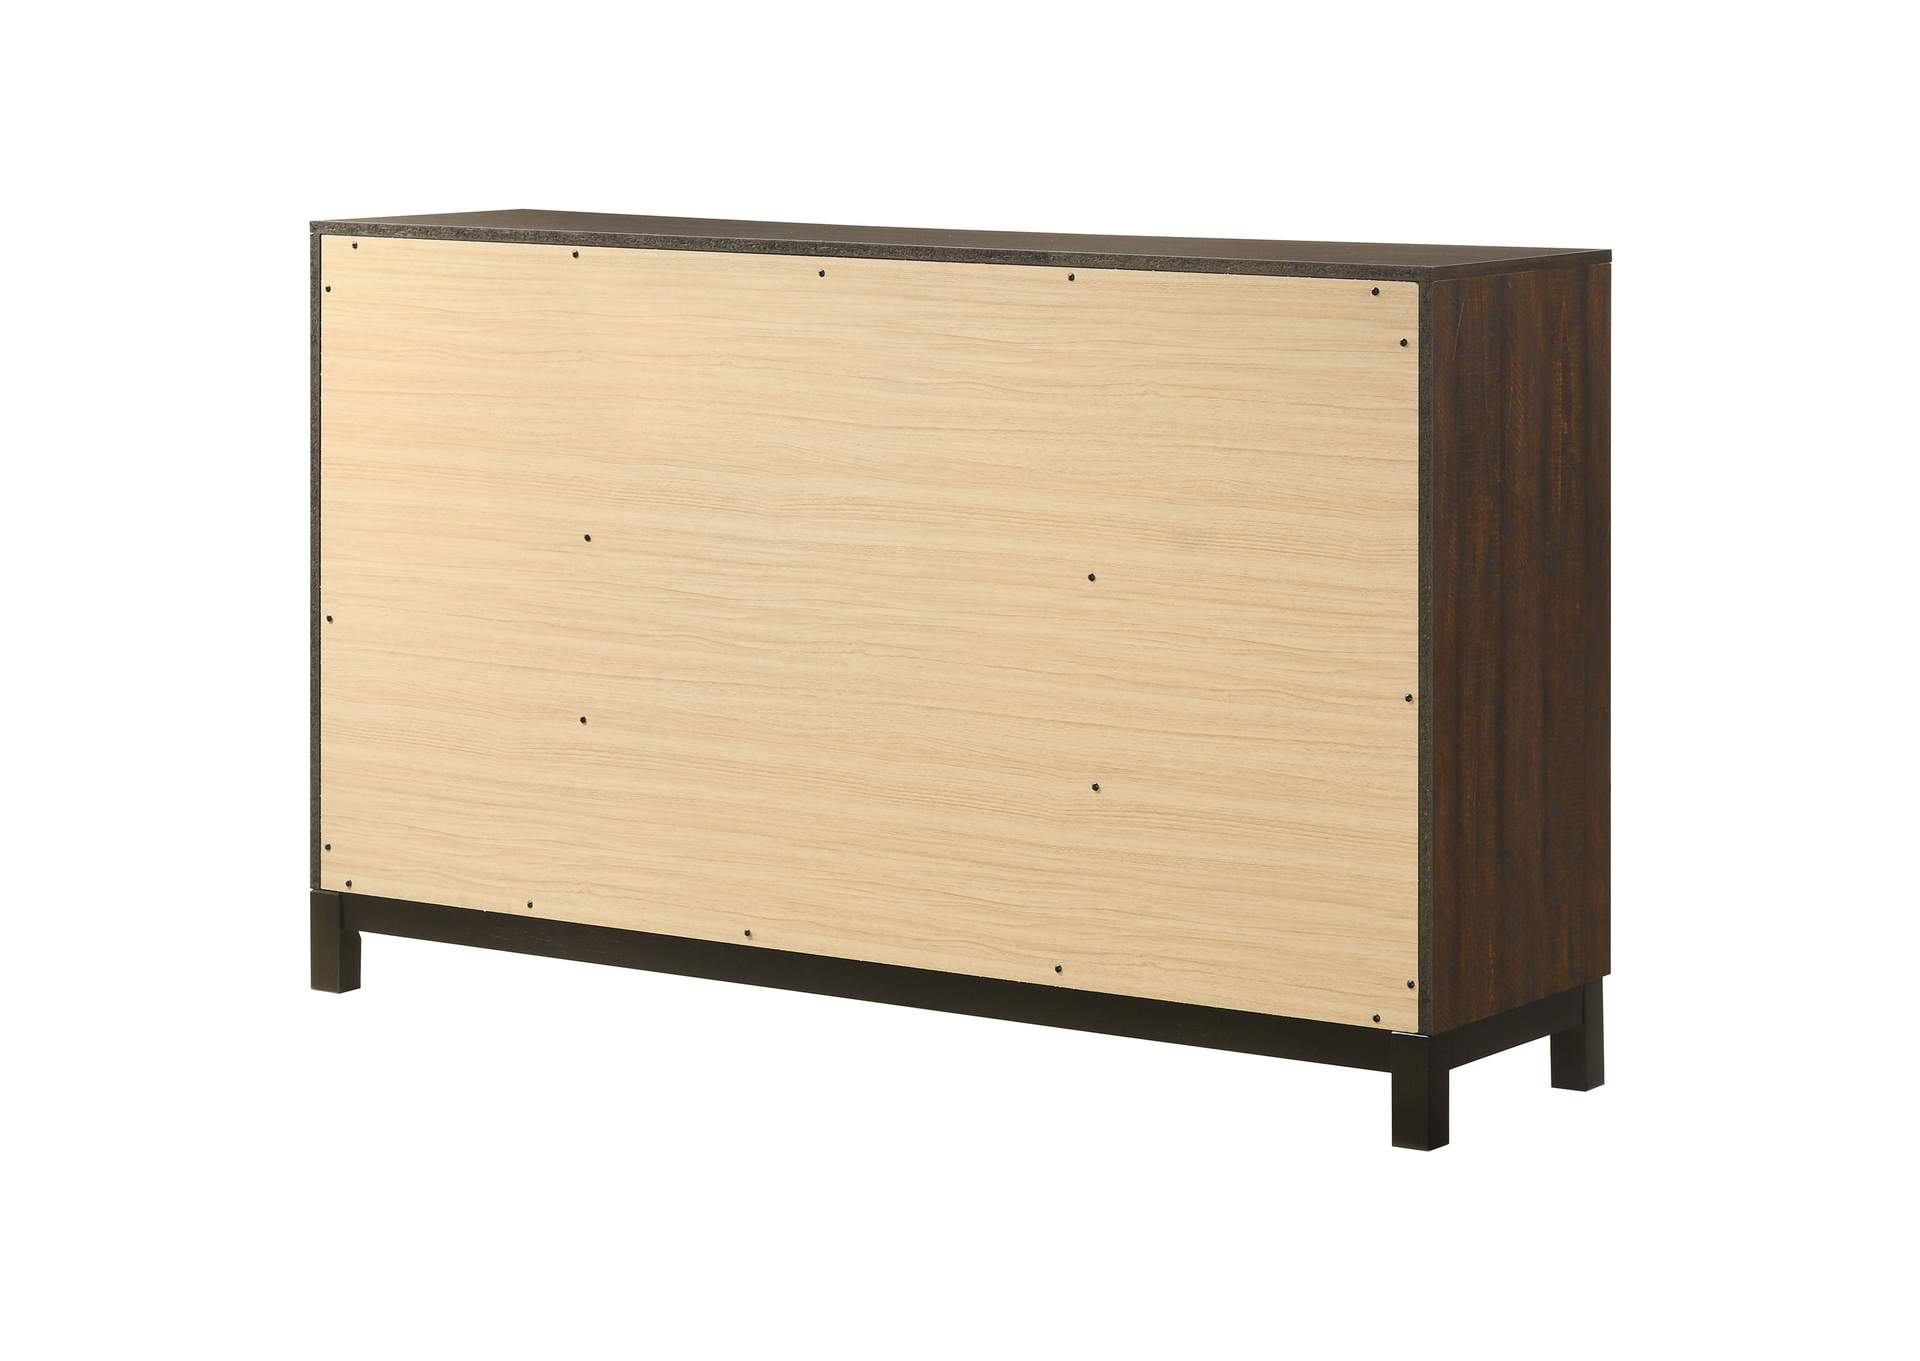 Edmonton 6-drawer Dresser Rustic Tobacco,Coaster Furniture